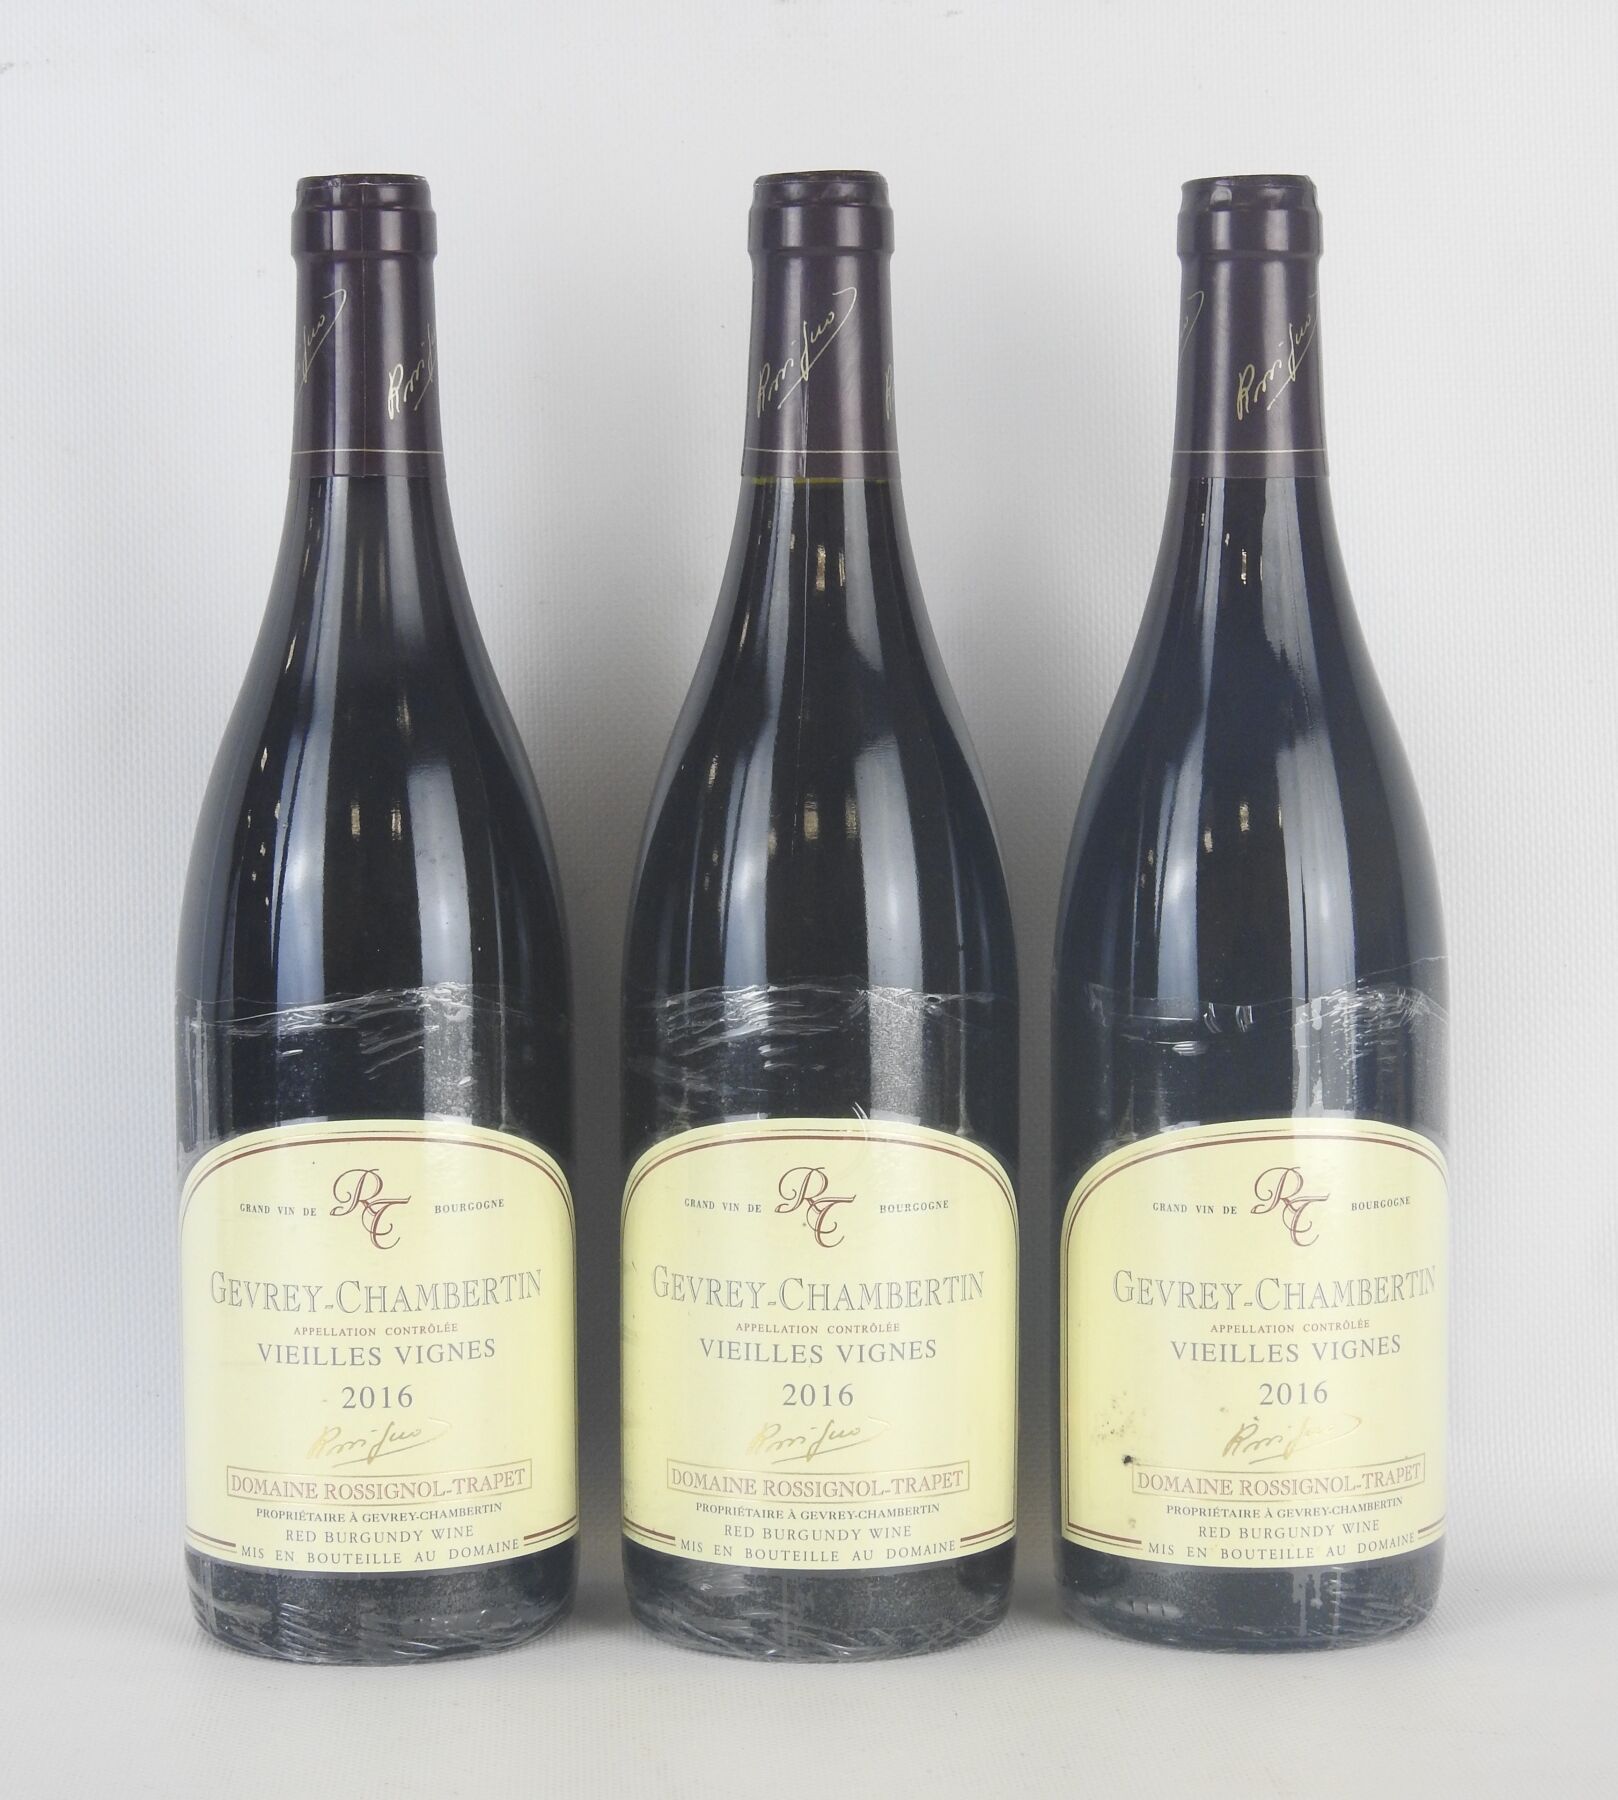 Null 3 bouteilles Gevrey Chambertin Vieilles Vignes 2016 Domaine Rossignol-Trape&hellip;